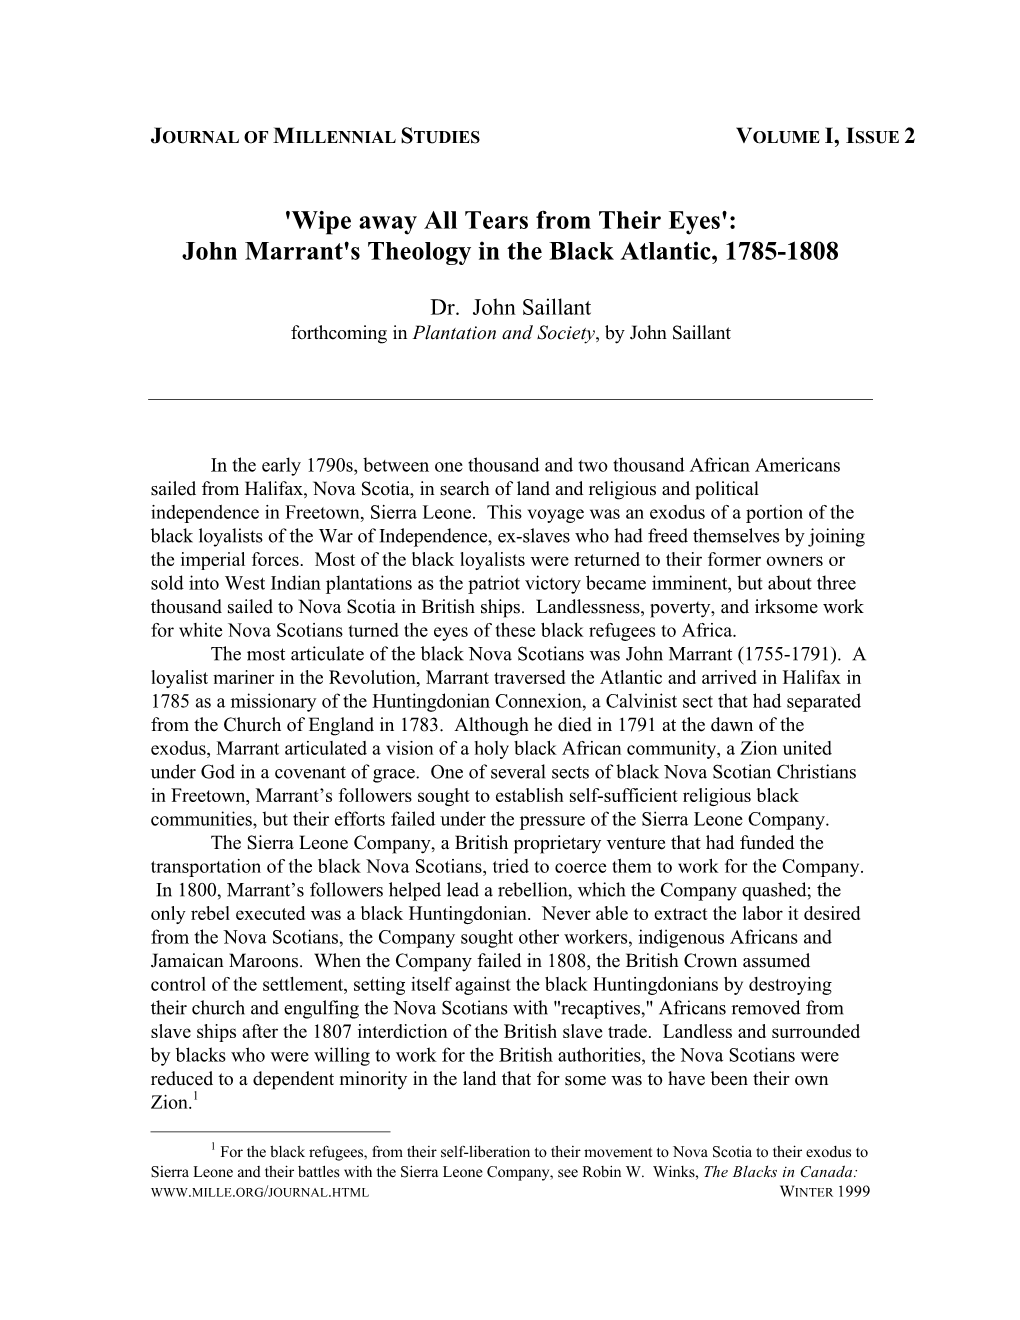 John Marrant's Theology in the Black Atlantic, 1785-1808